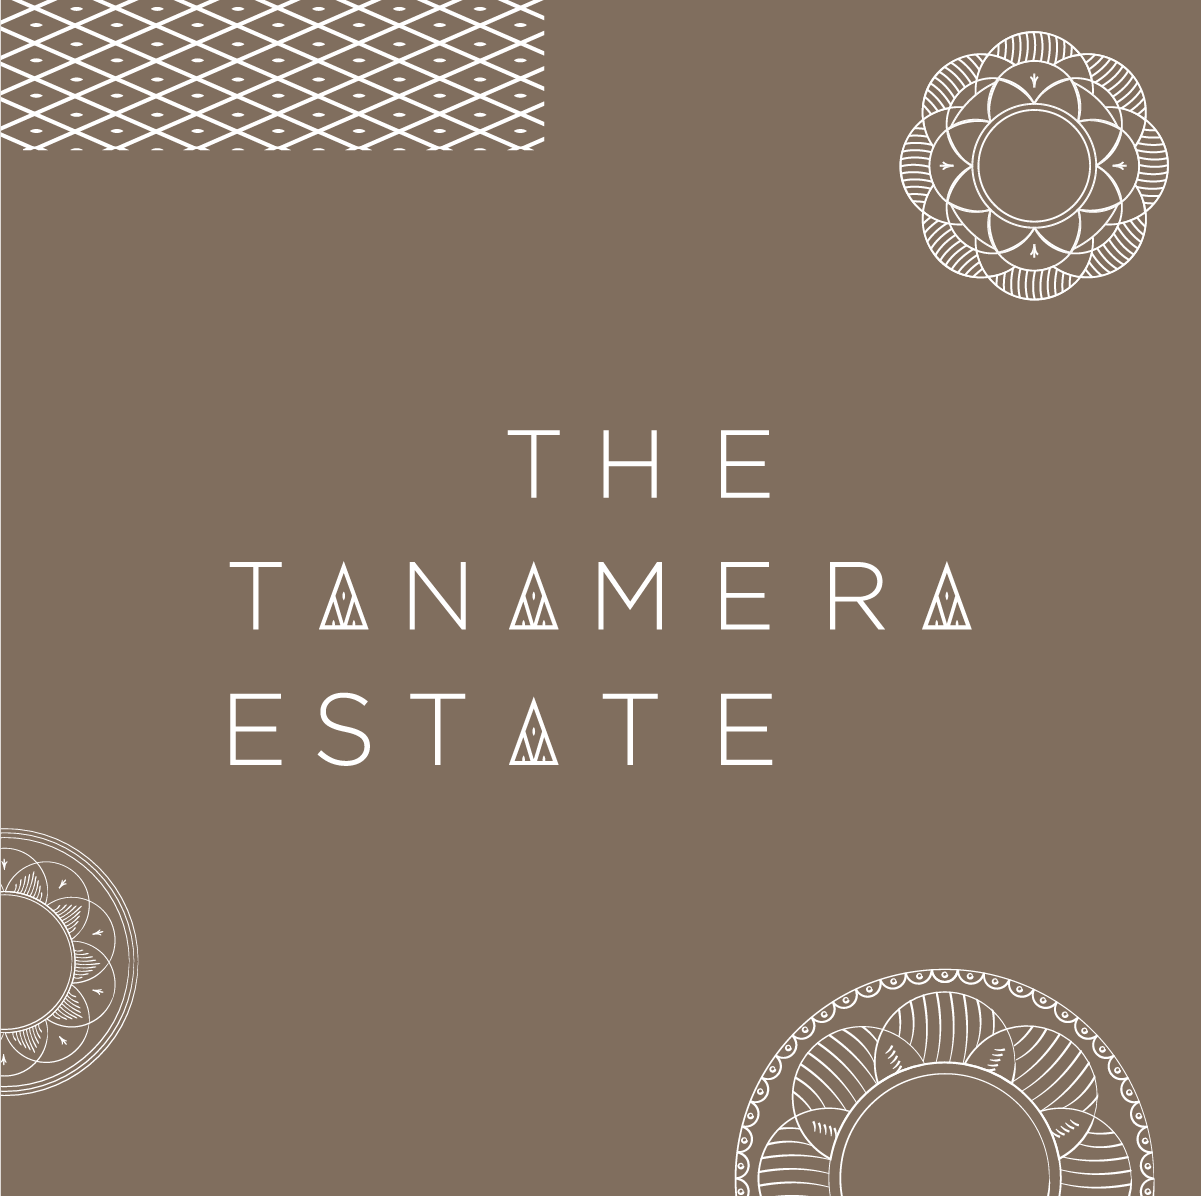 The Tanamera Estate